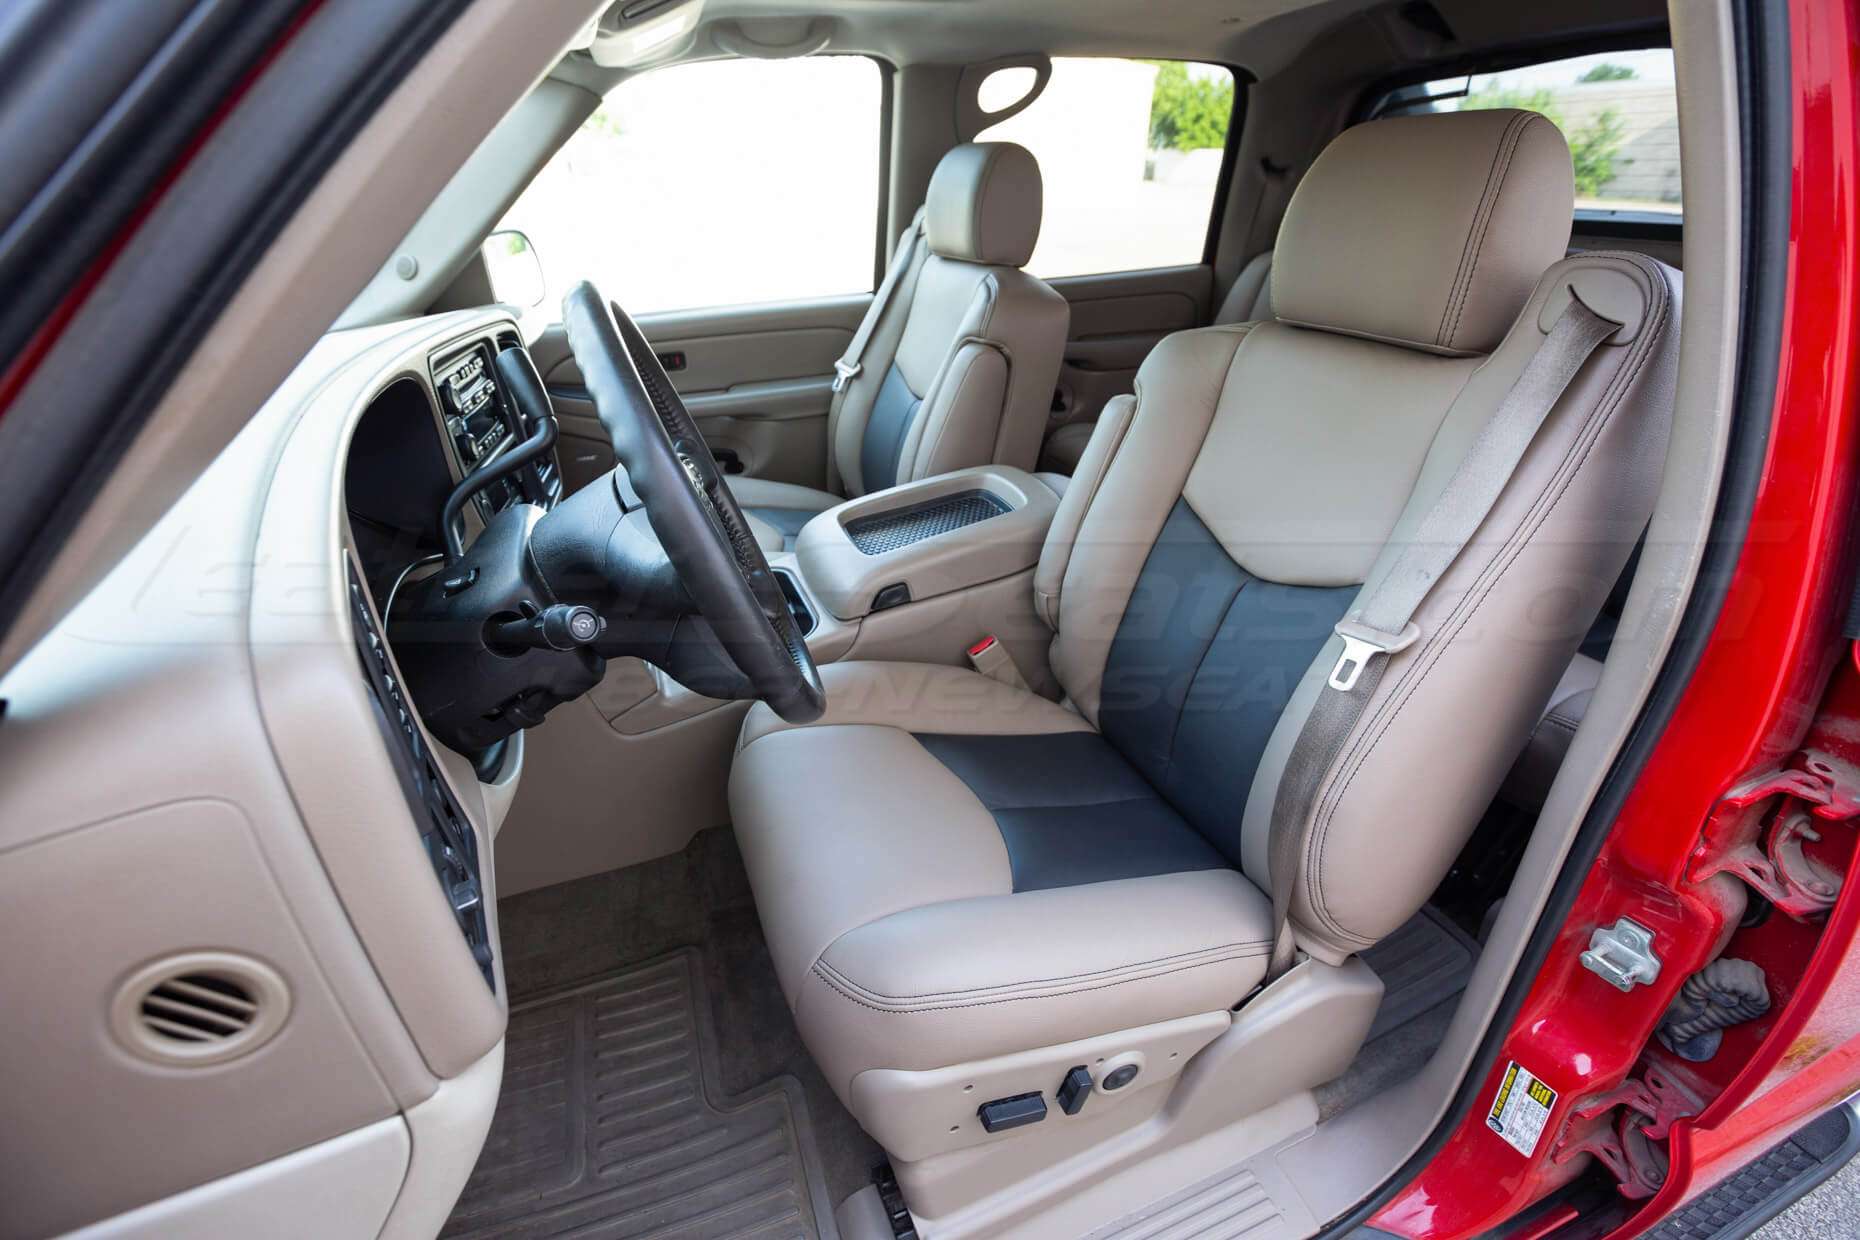 03-06 Chevrolet Avalanche Installed Upholstery Kit - Desert & Black - Front Driver Seat - wide